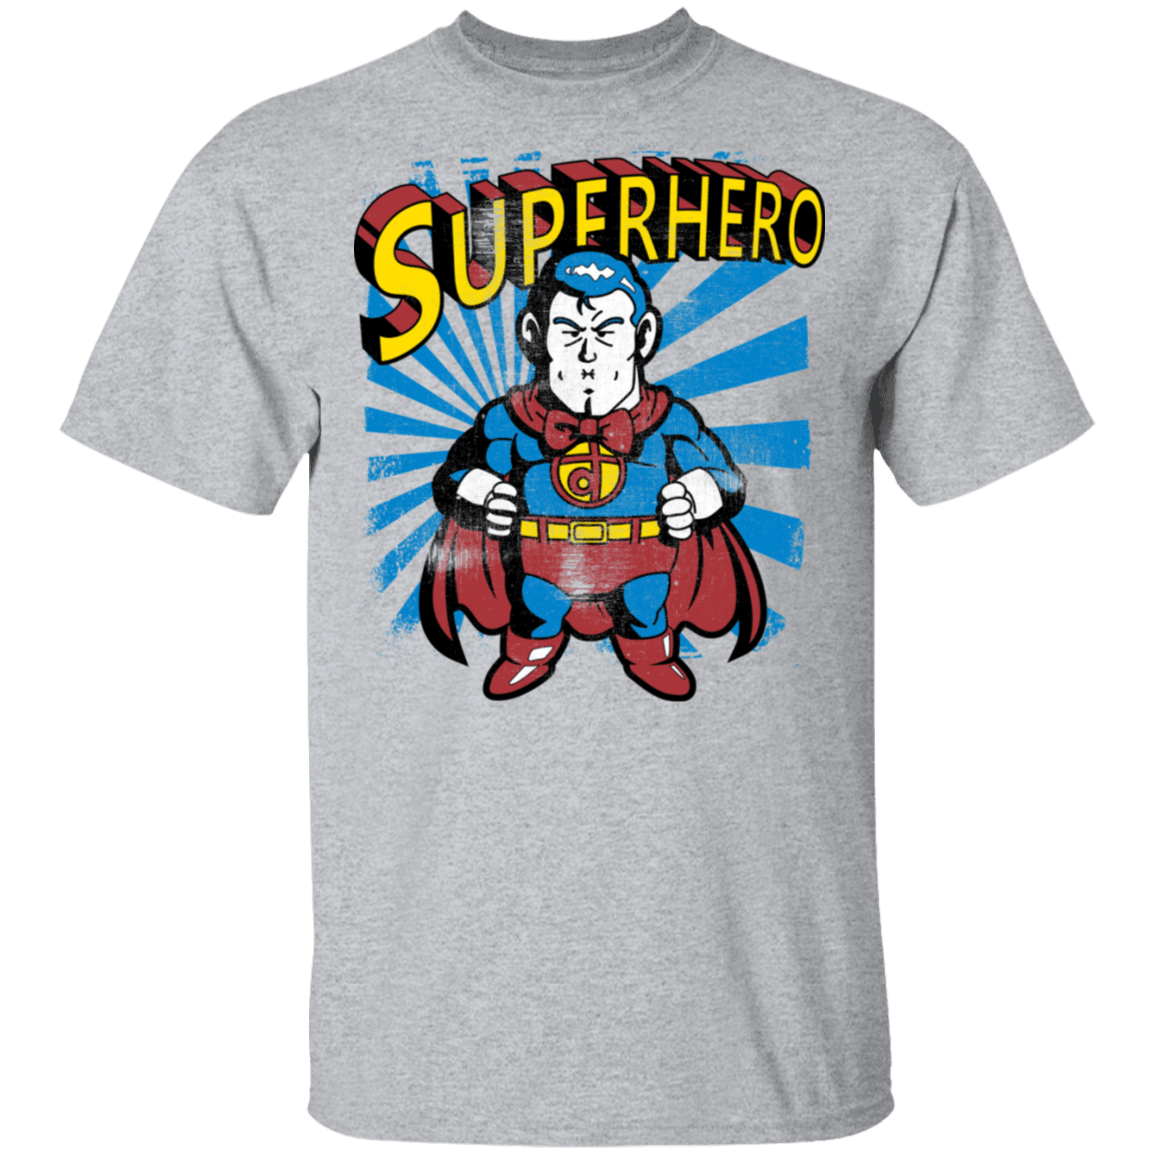 T-Shirts Sport Grey / S Superhero T-Shirt